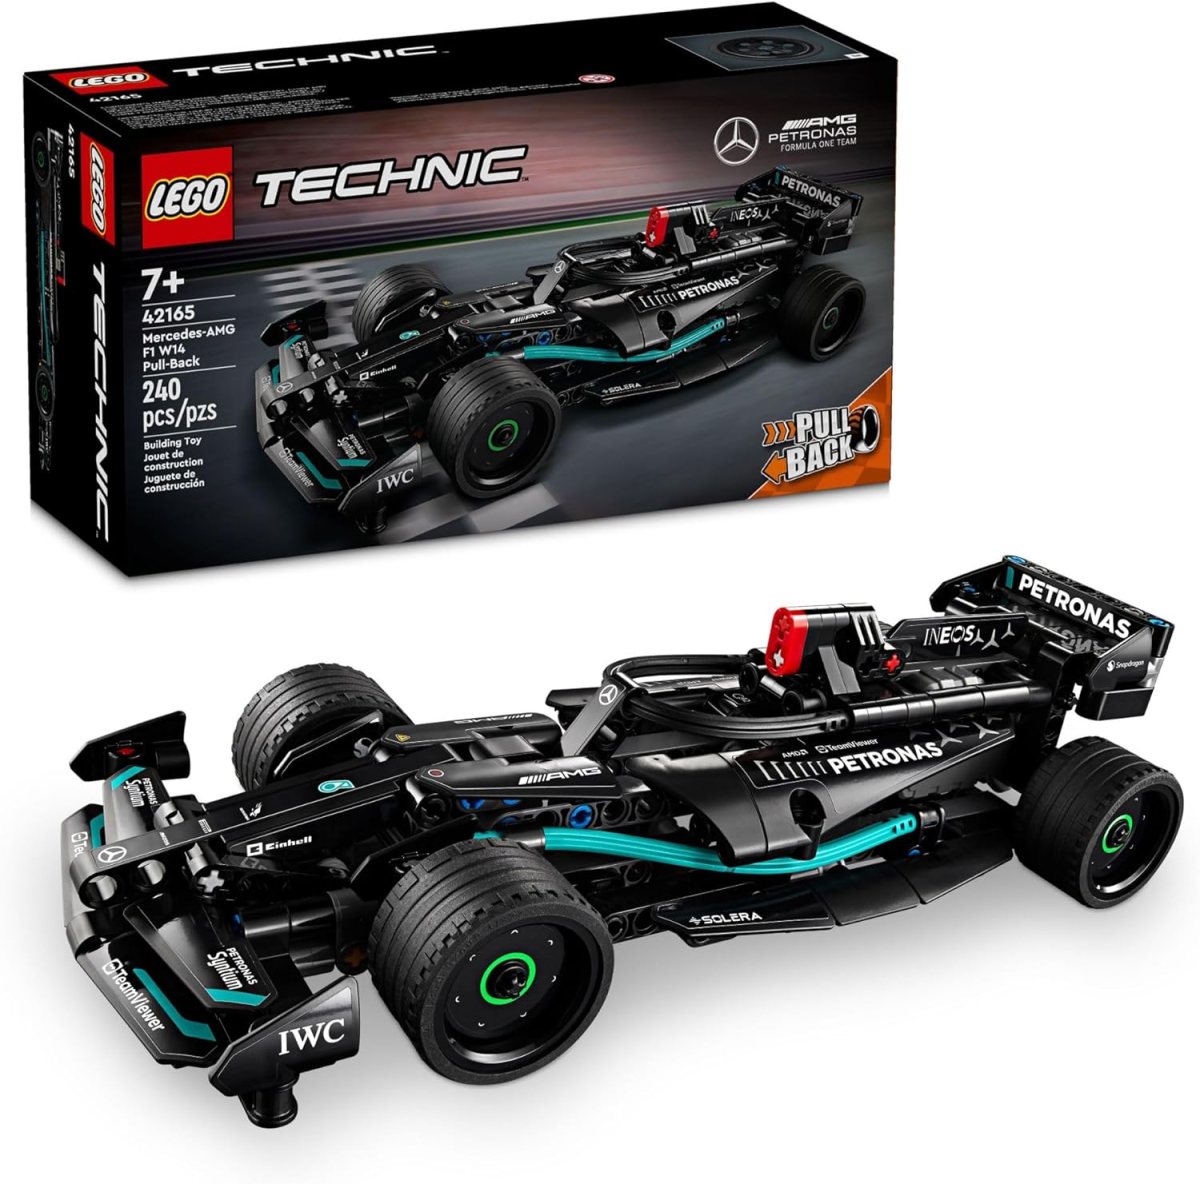 F1 racecar LEGO set.